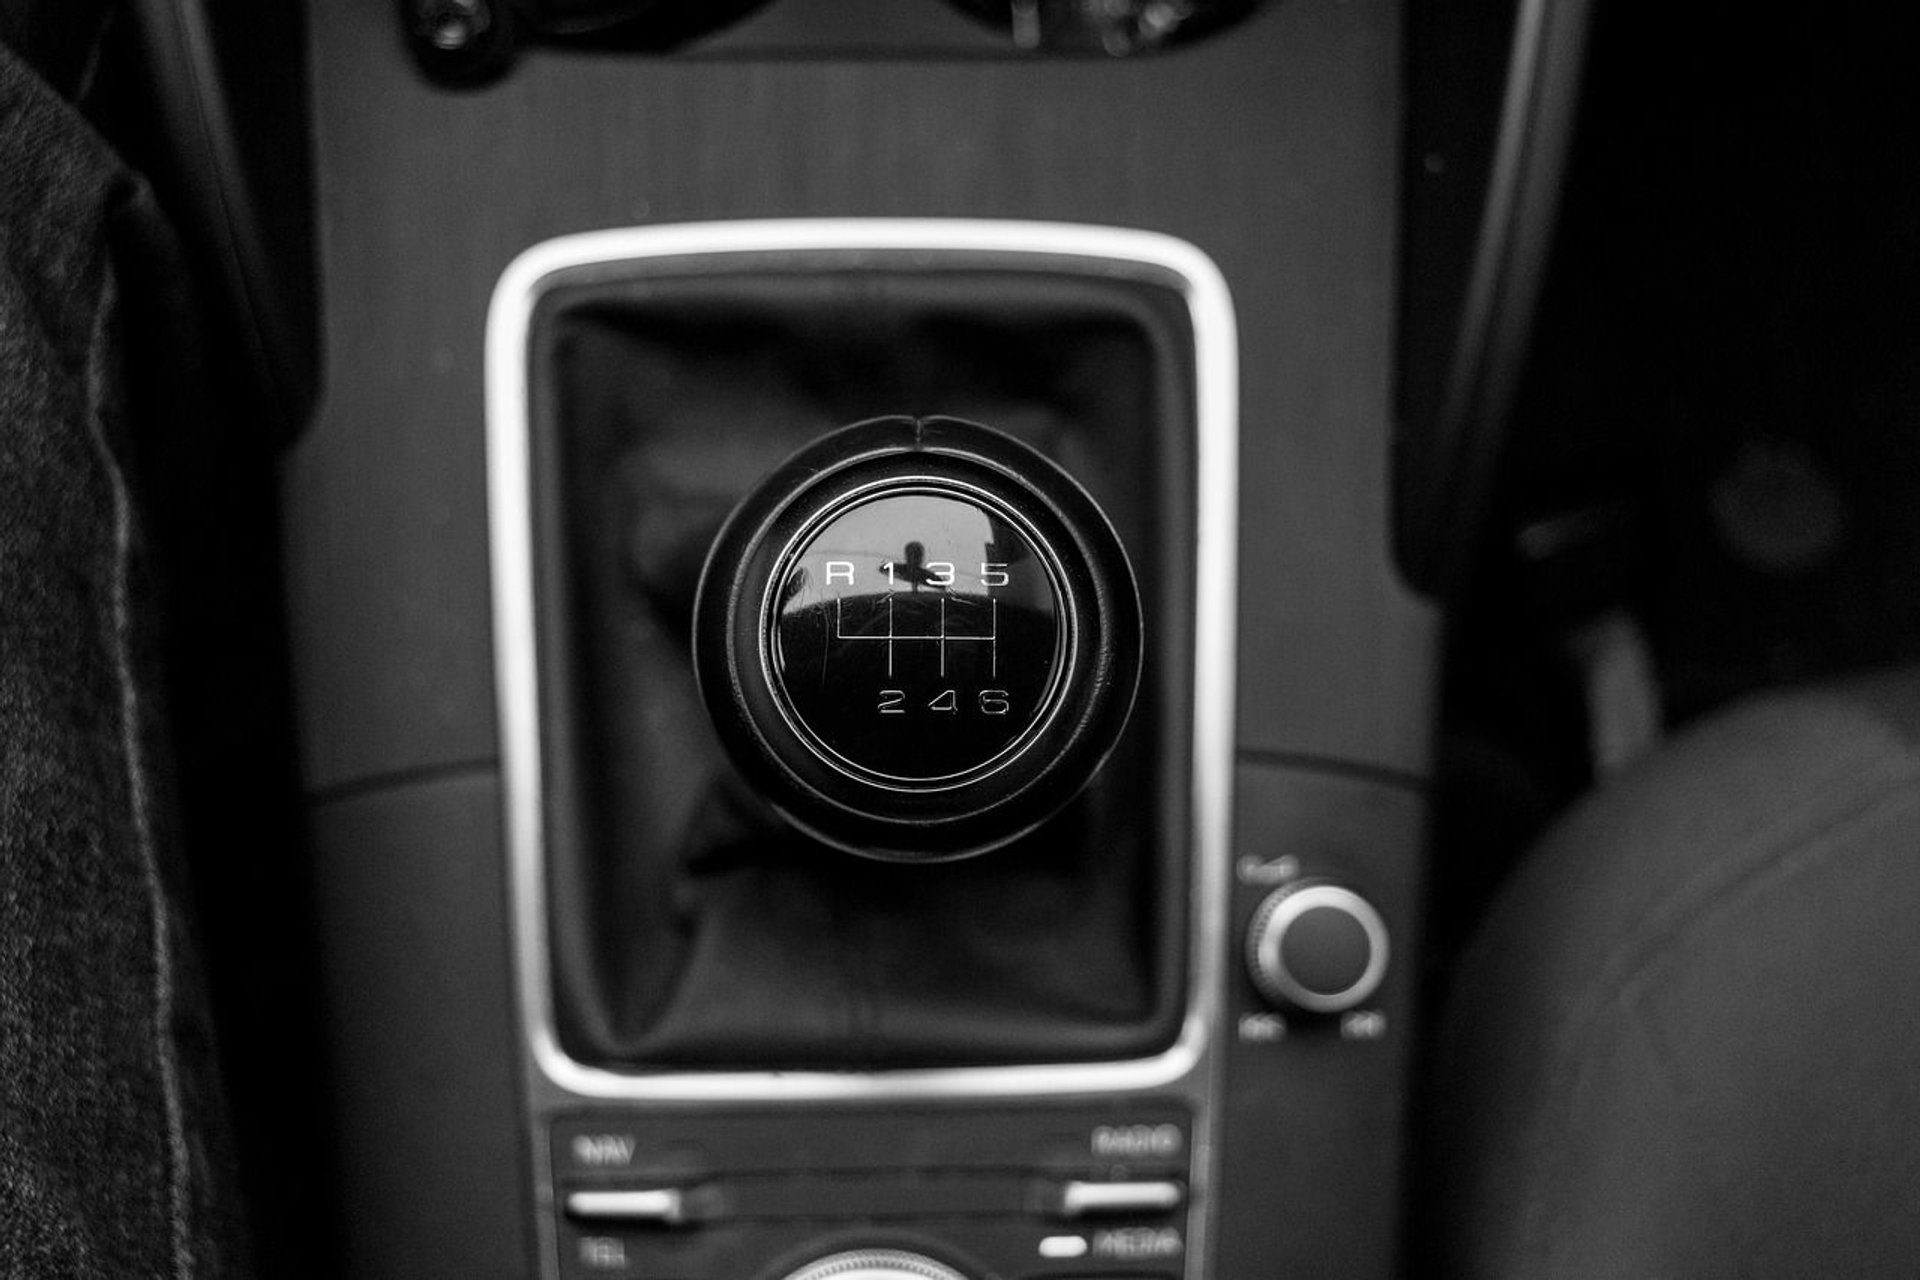 Short shifter – idealny sposób na tuning samochodu